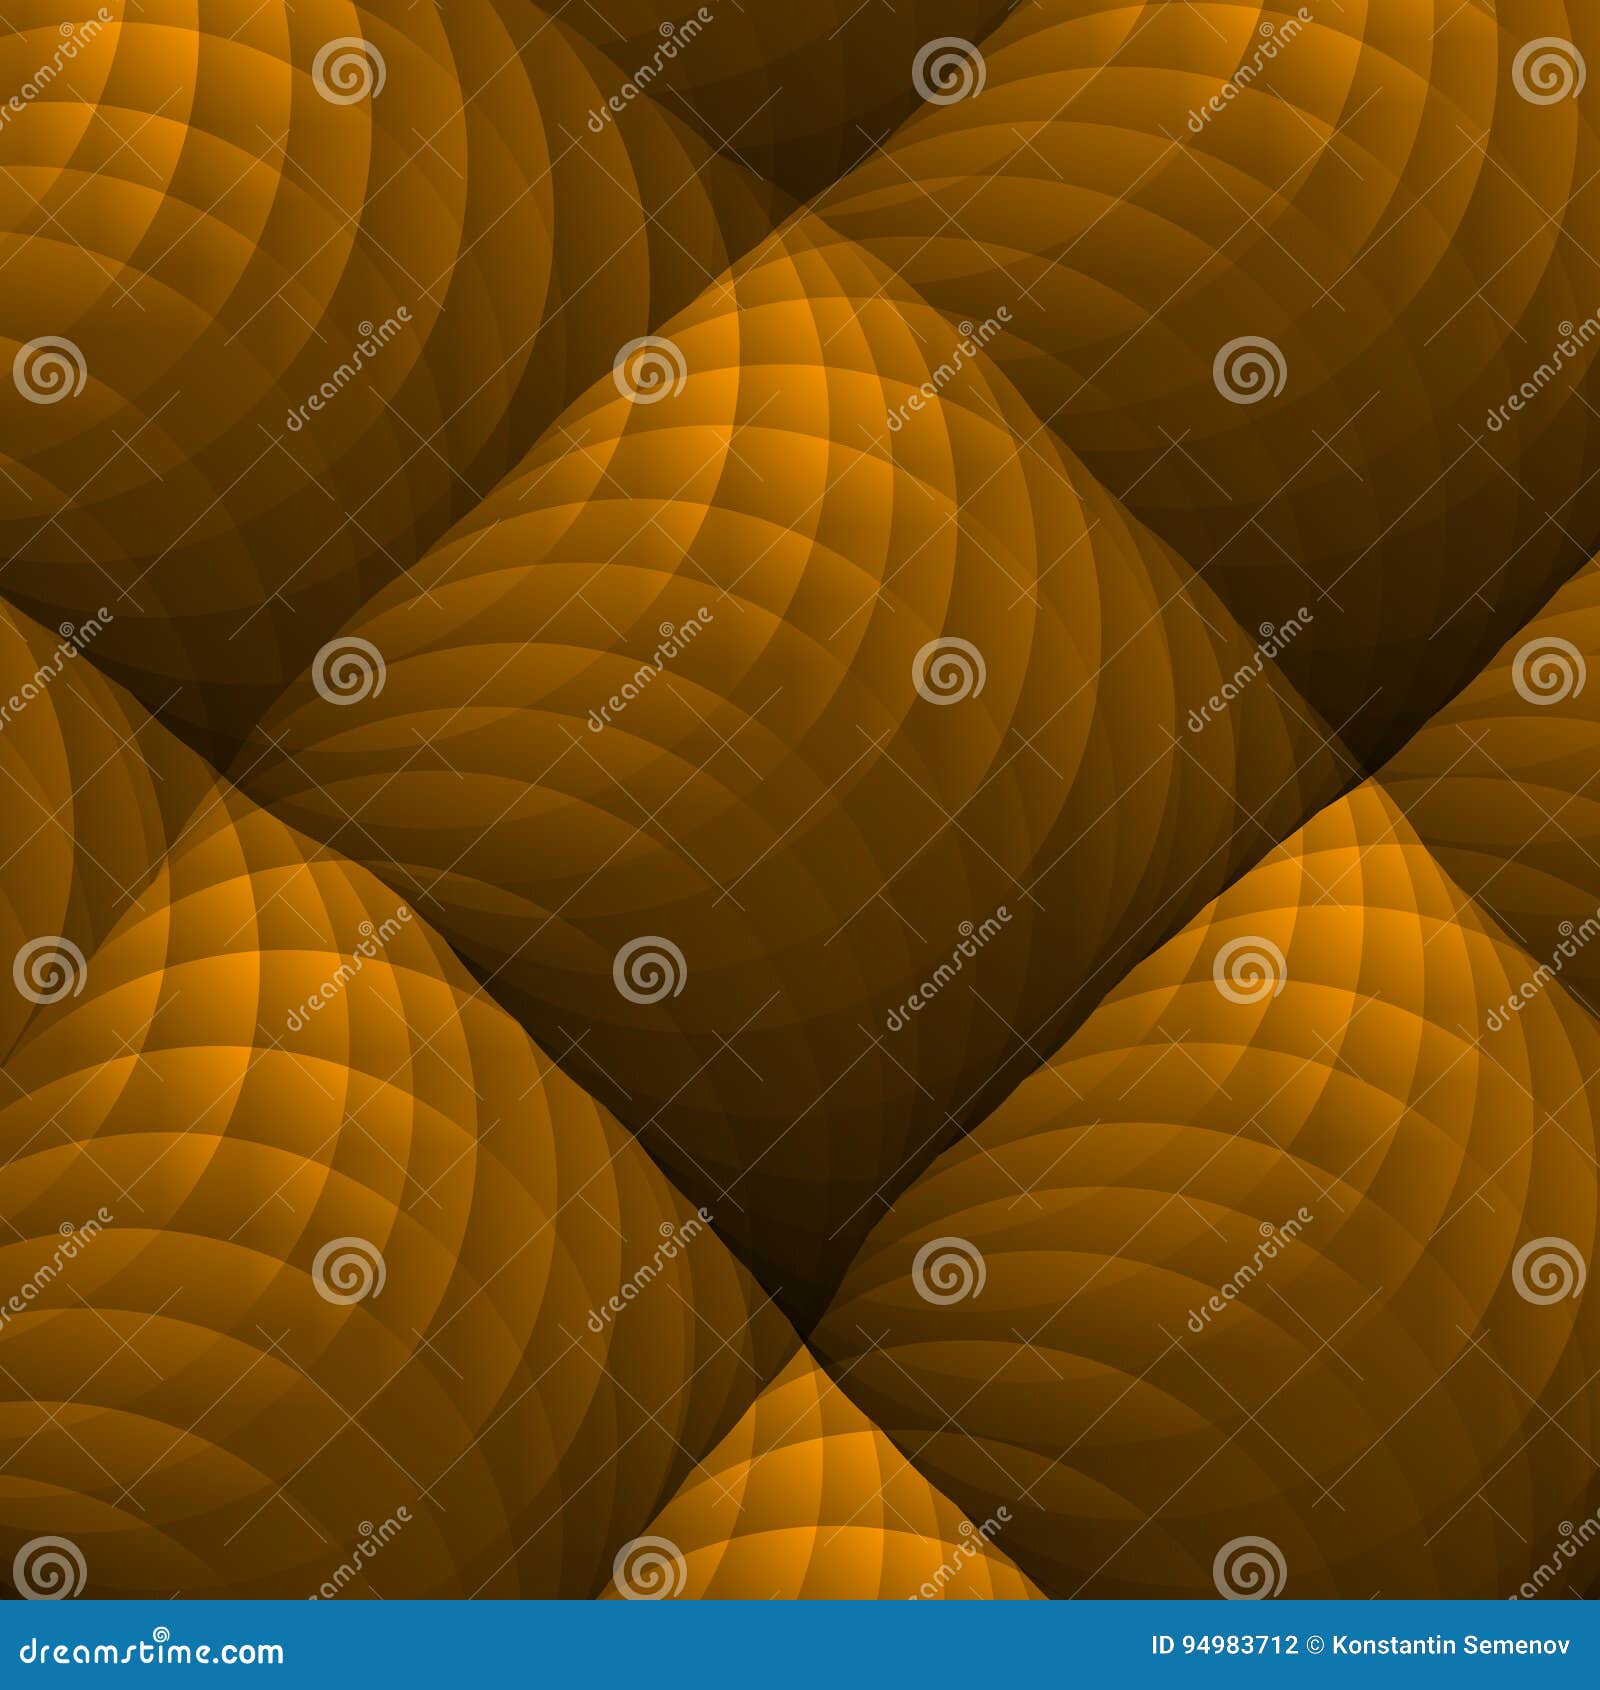 orange abstract background.